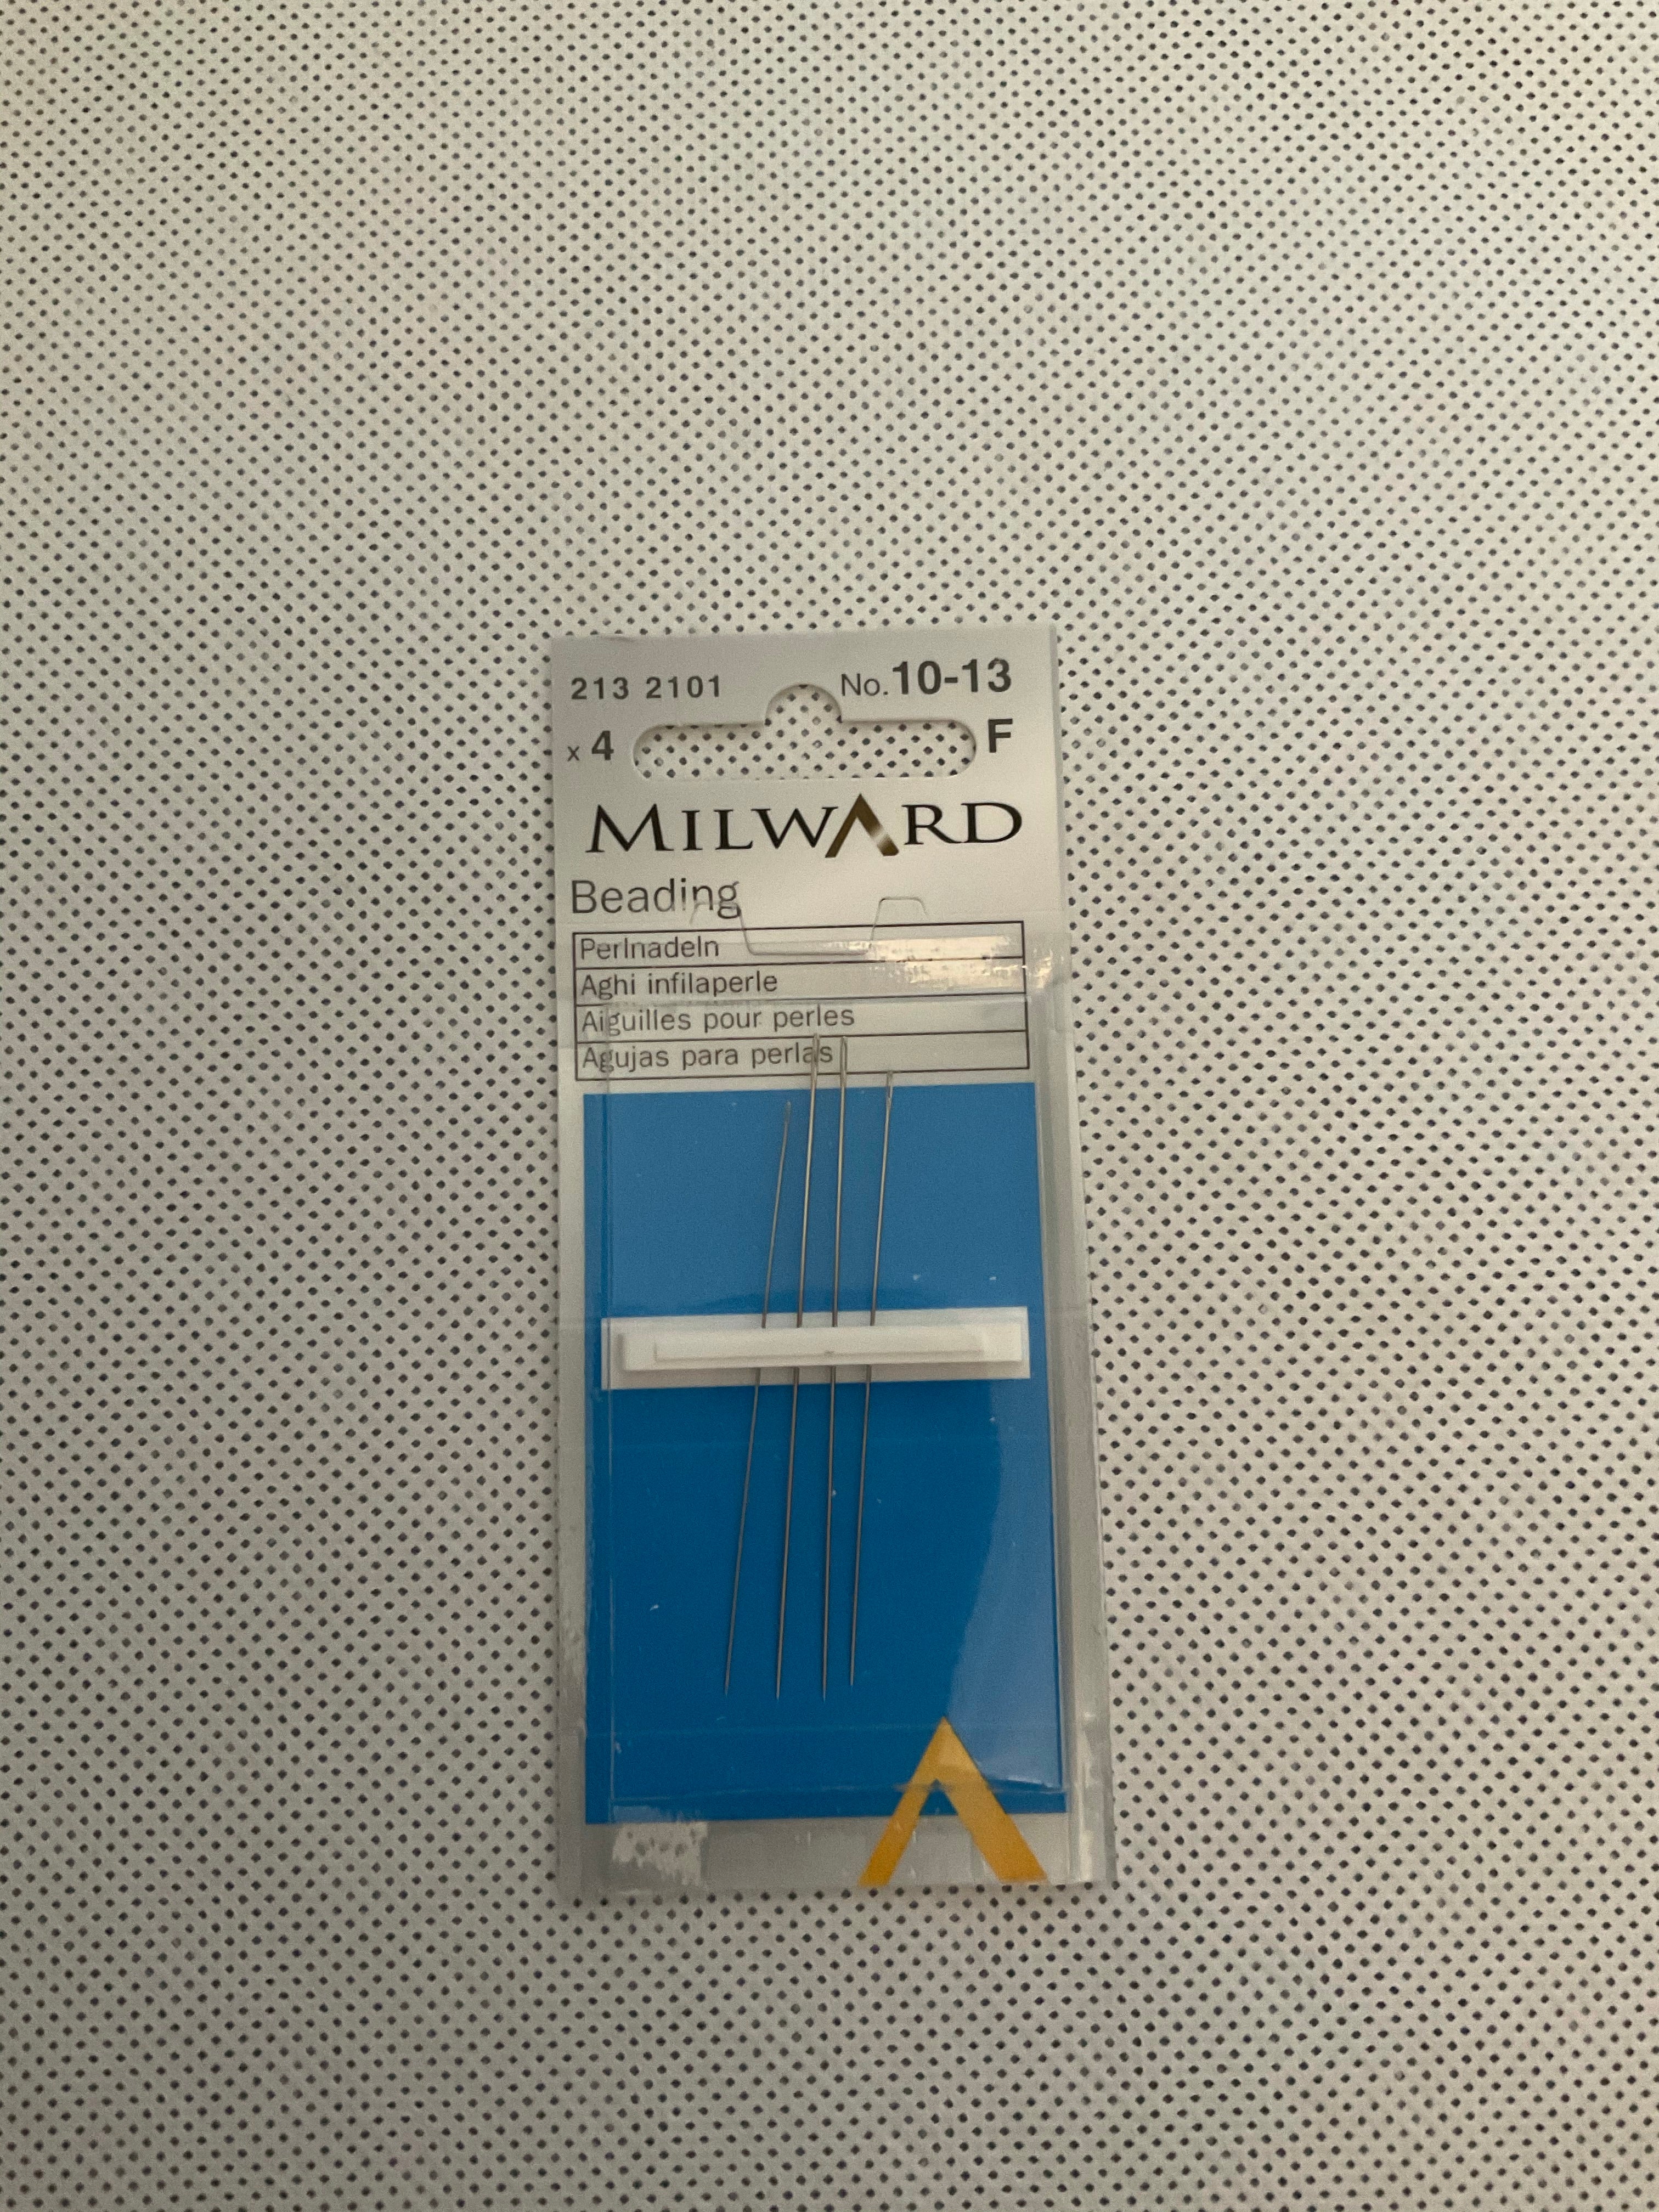 Milward beading needles10-13